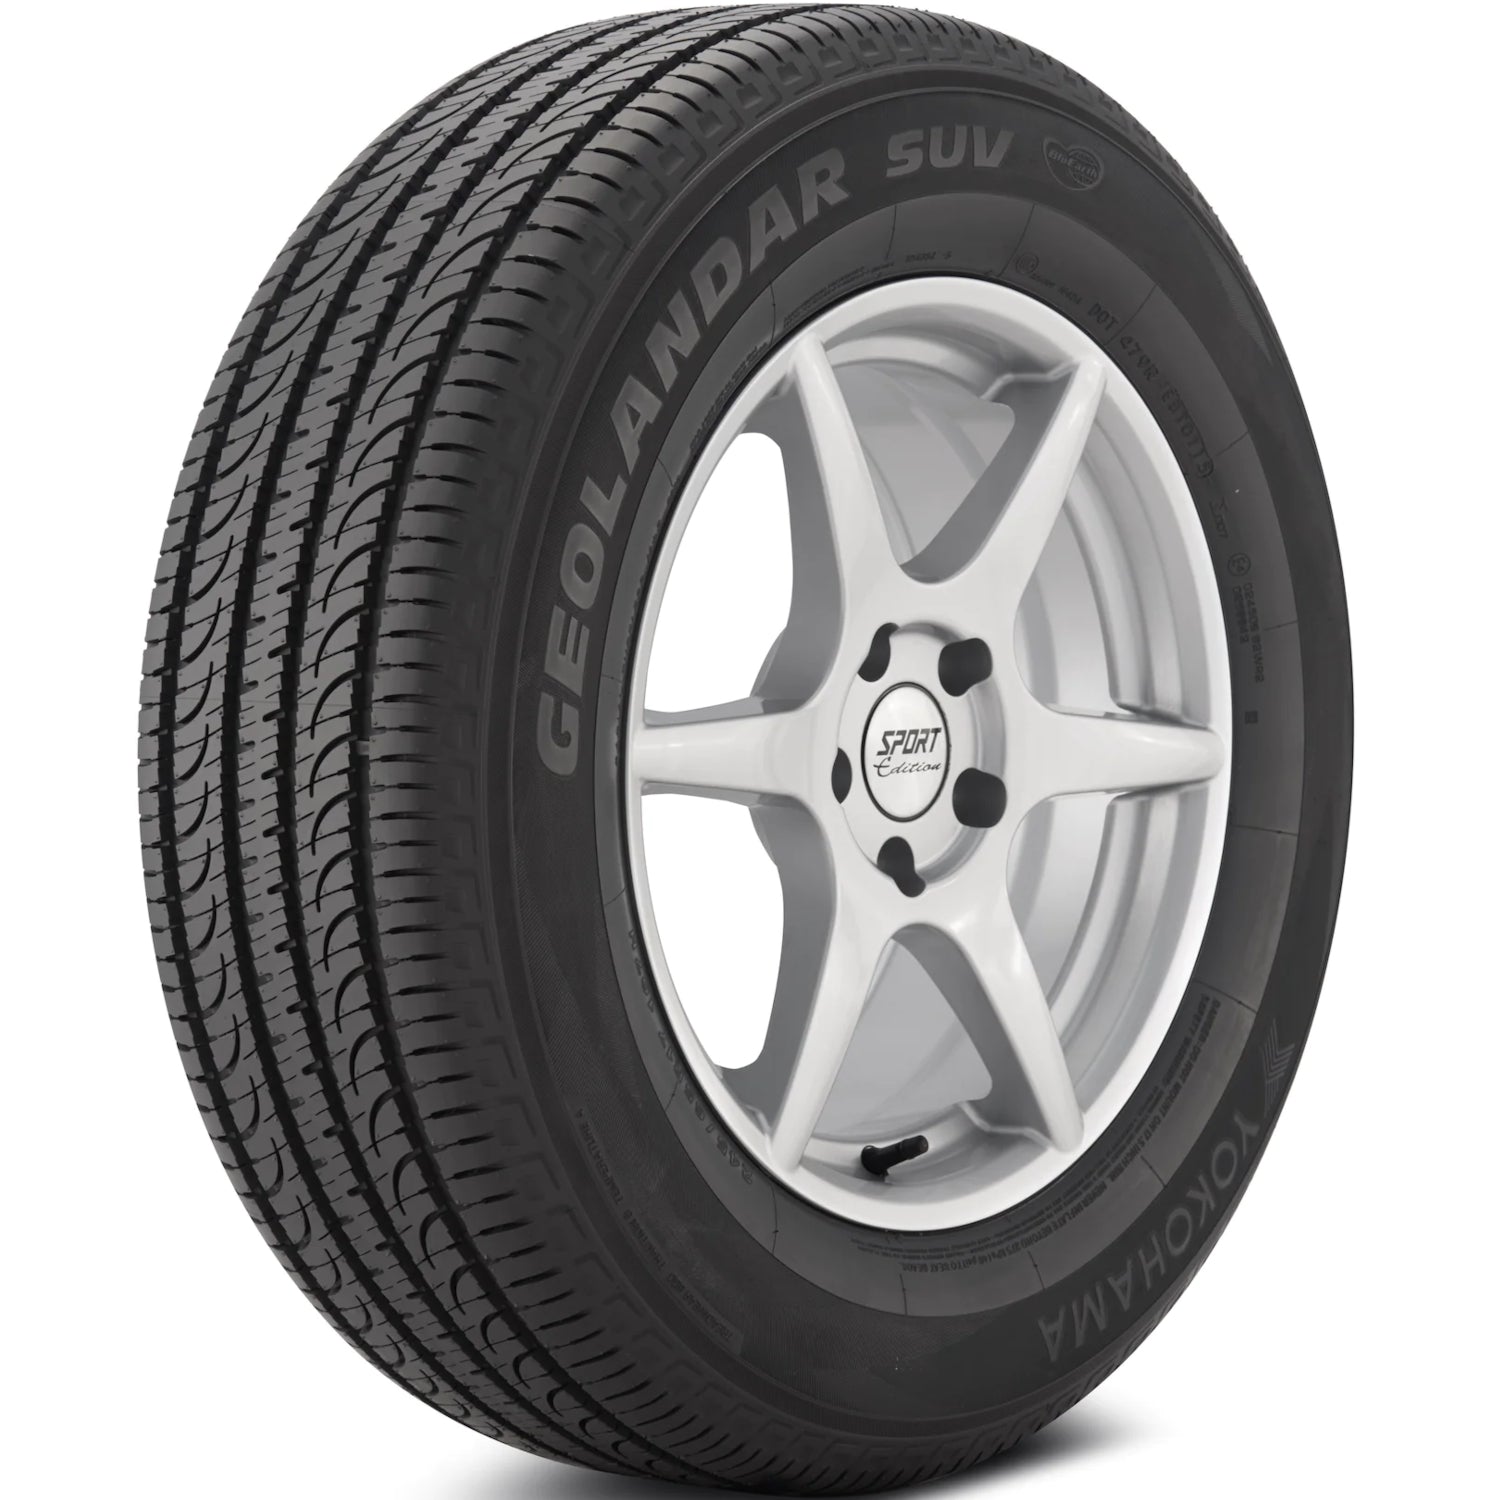 YOKOHAMA GEOLANDAR G055 235/60R18 (28.9X9.4R 18) Tires